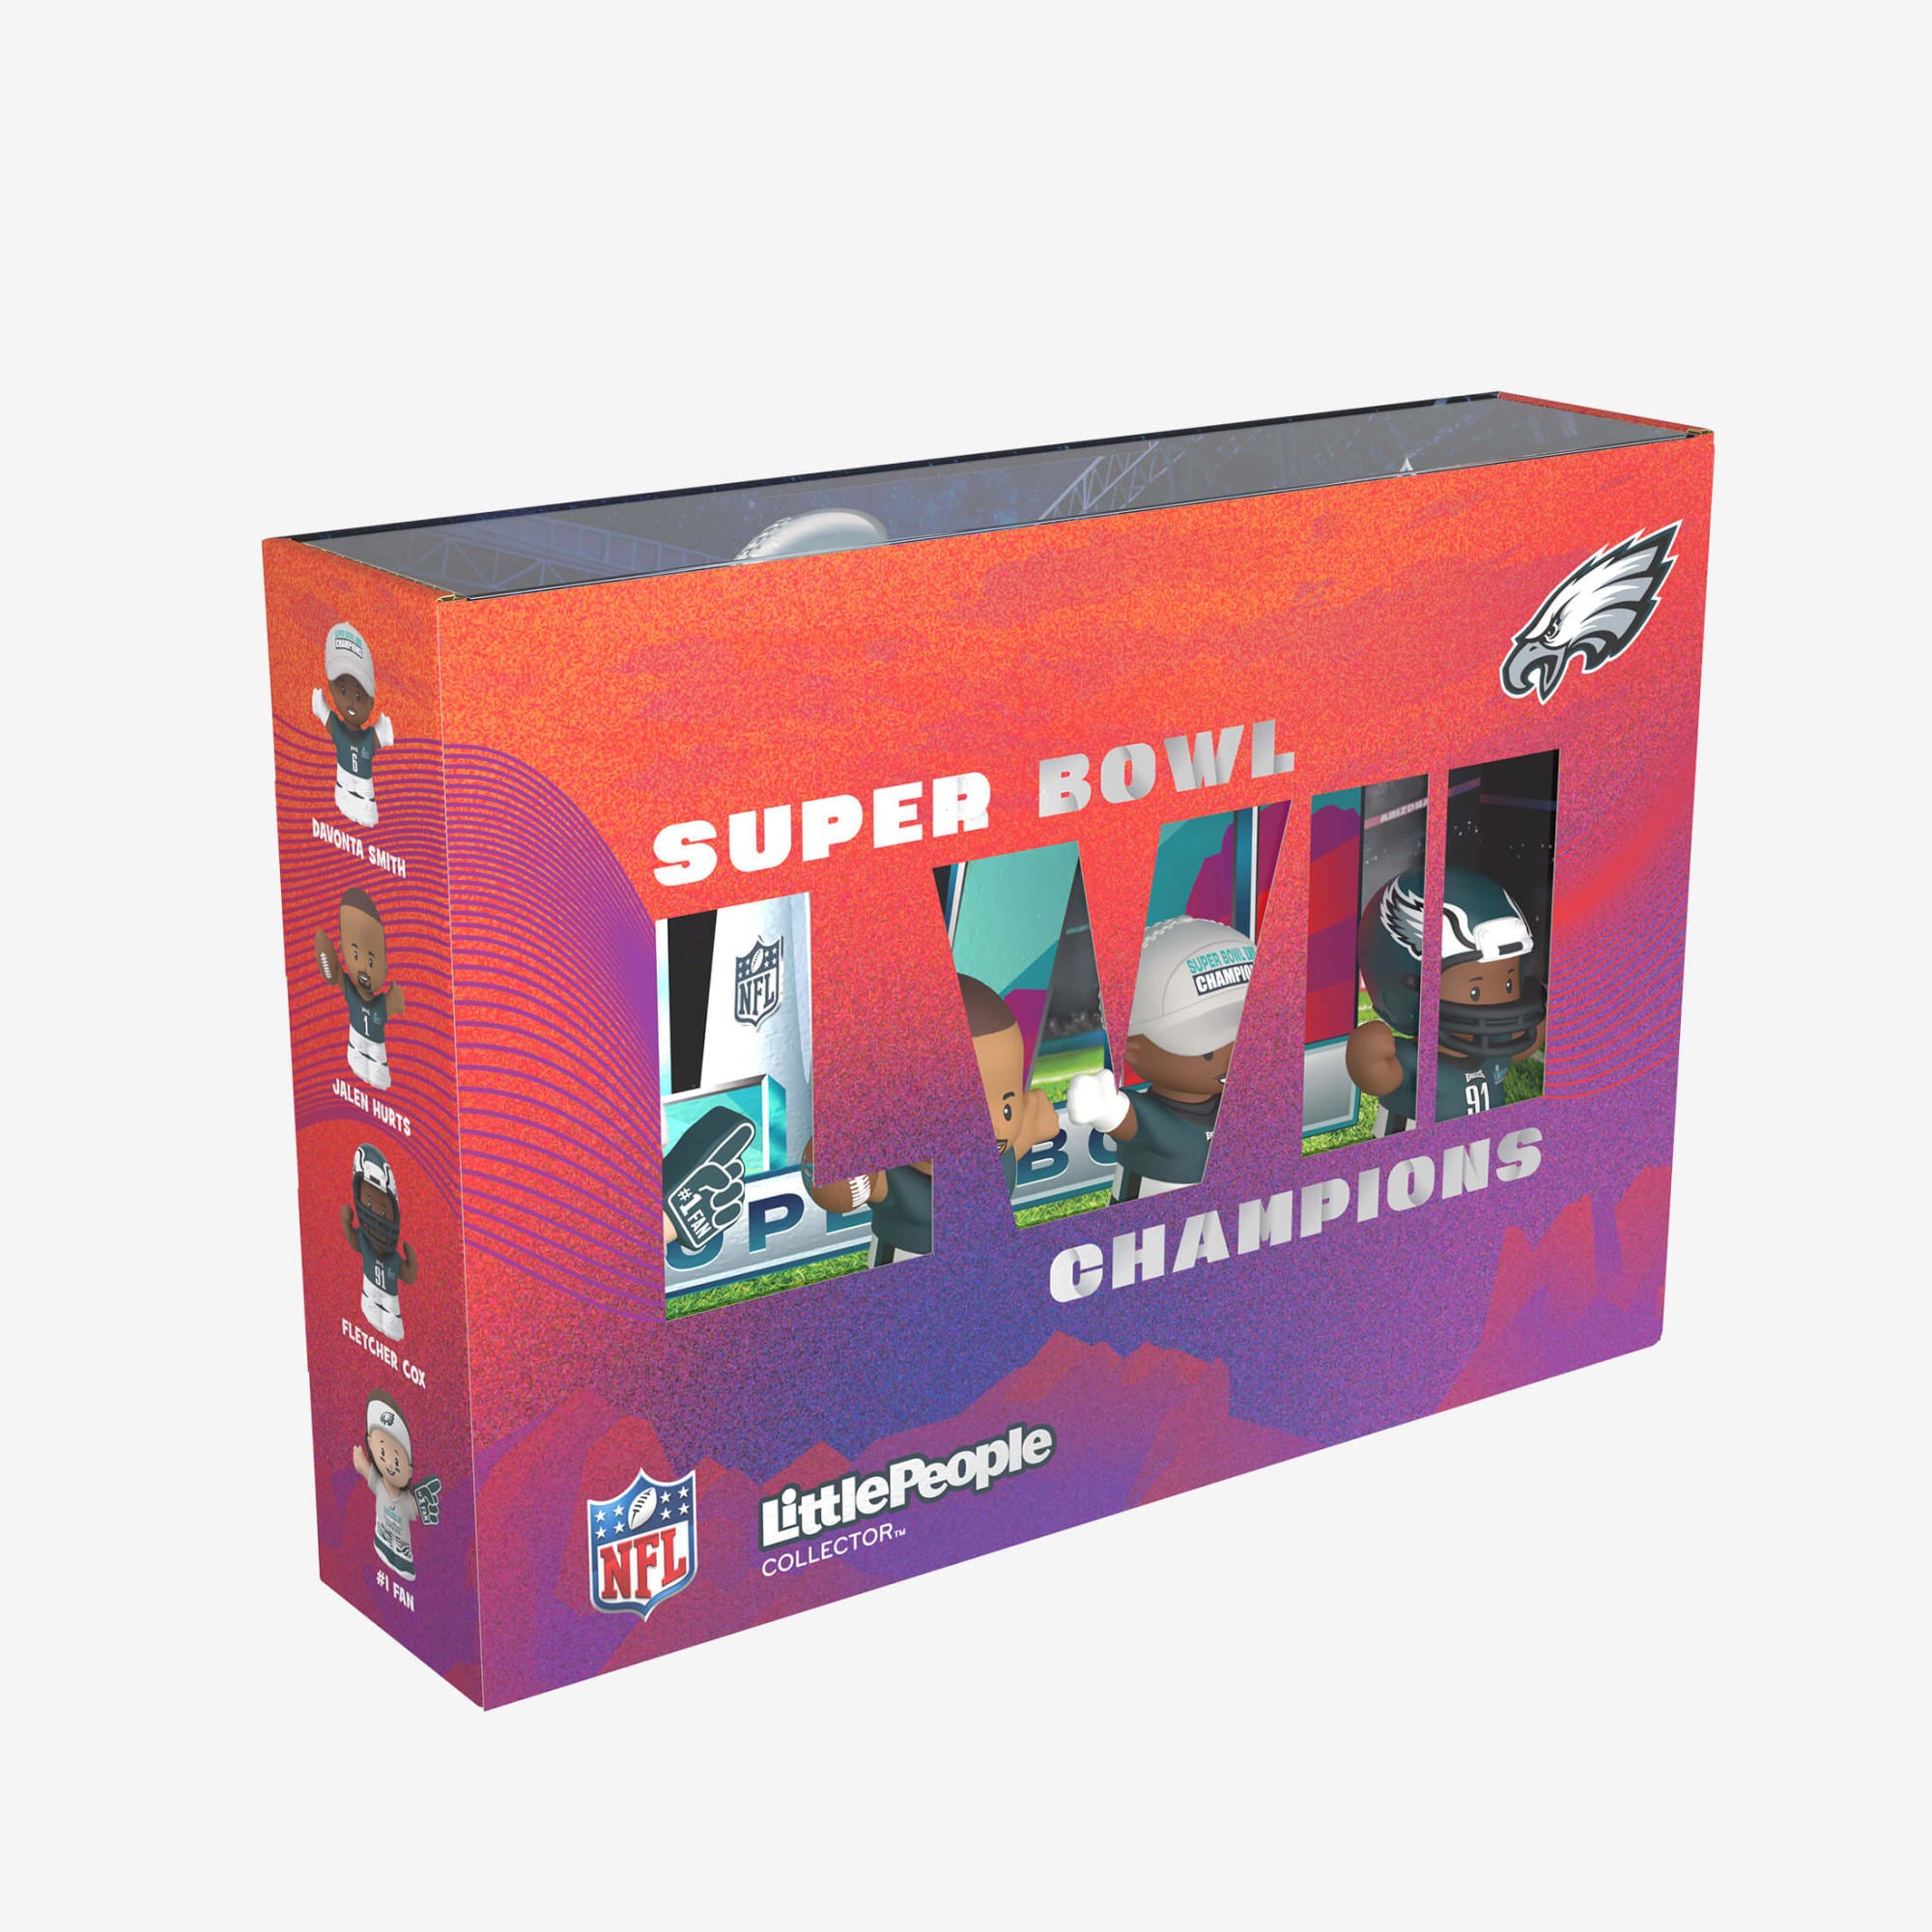 Super Bowl LVII 57 on BluRay Disc